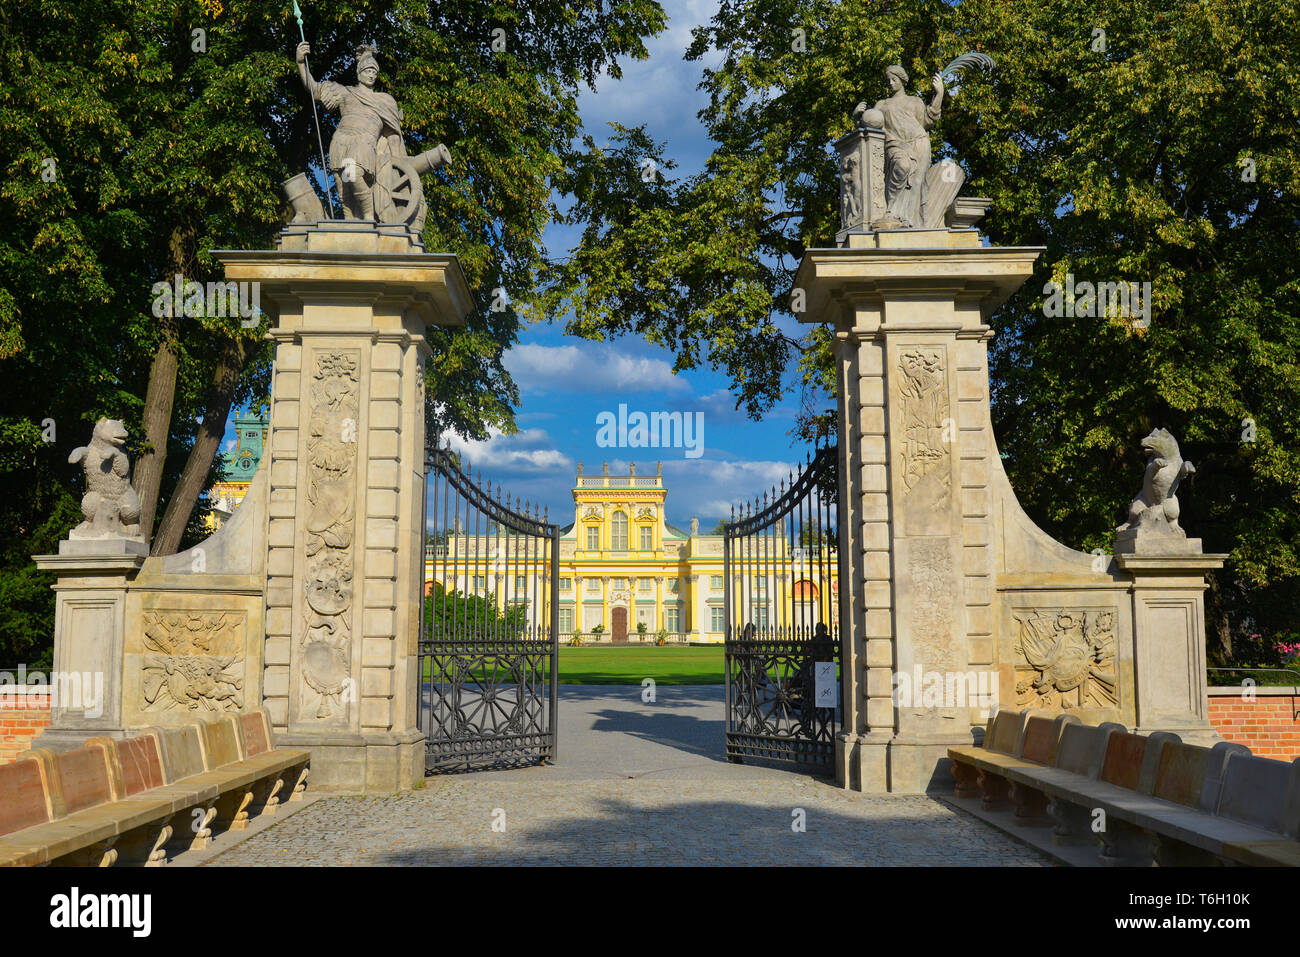 Beautiful Royal Wilanow Palace in Warsaw, Poland Stock Photo